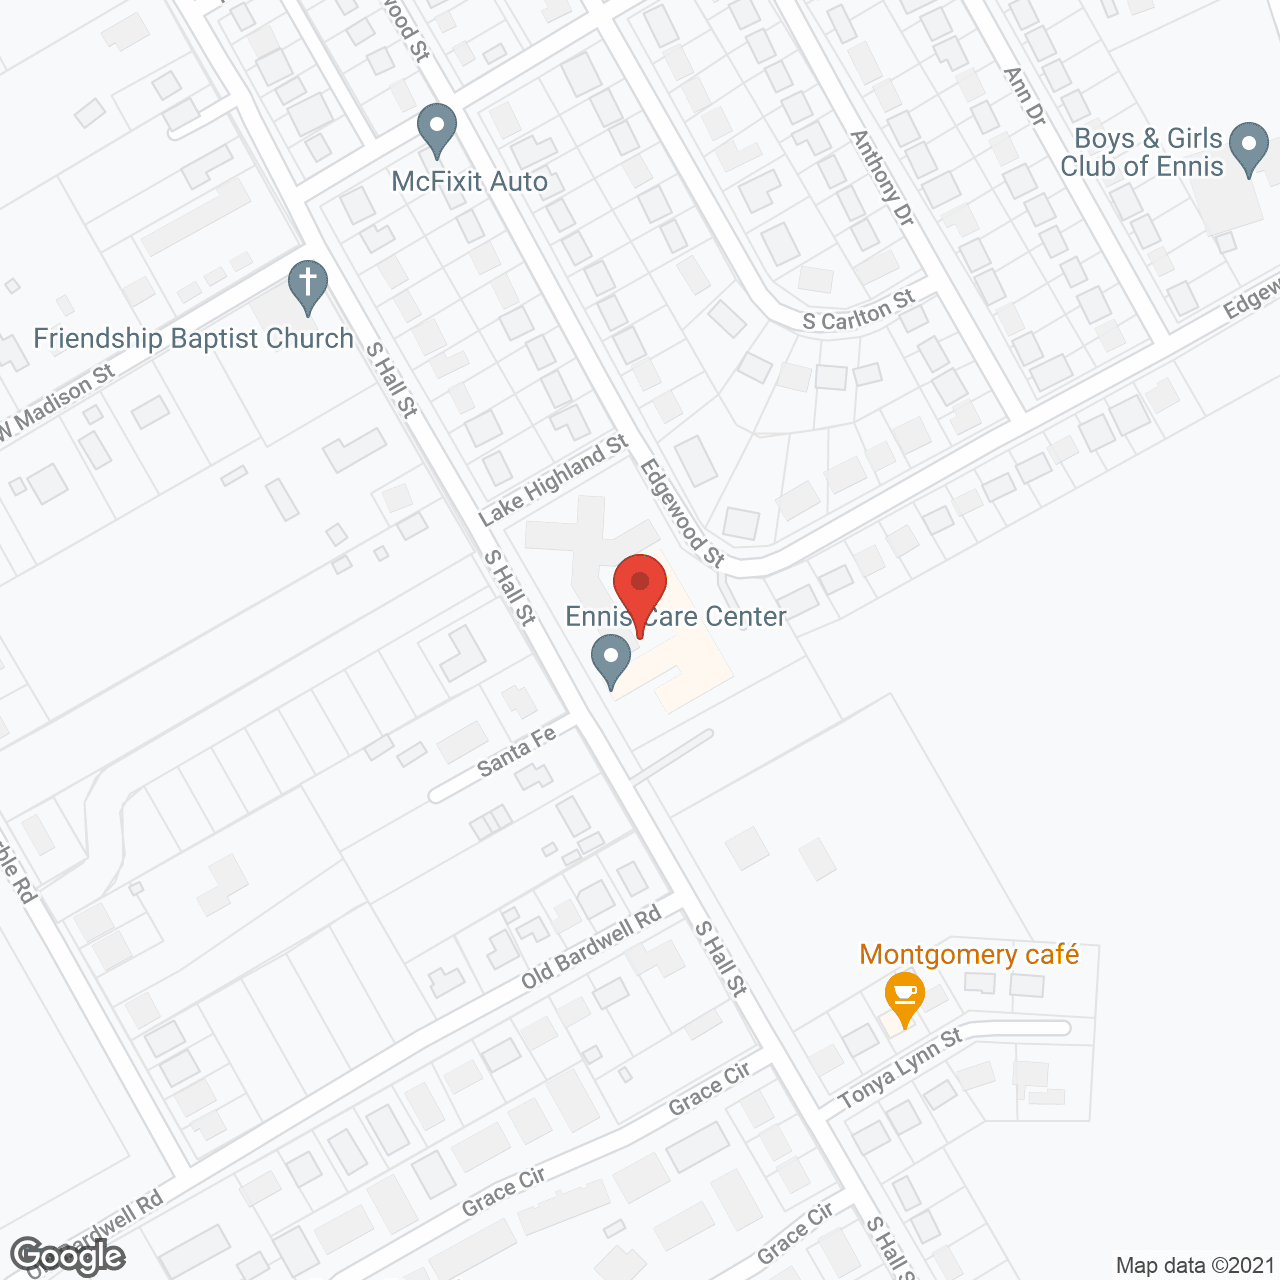 Ennis Care Center in google map